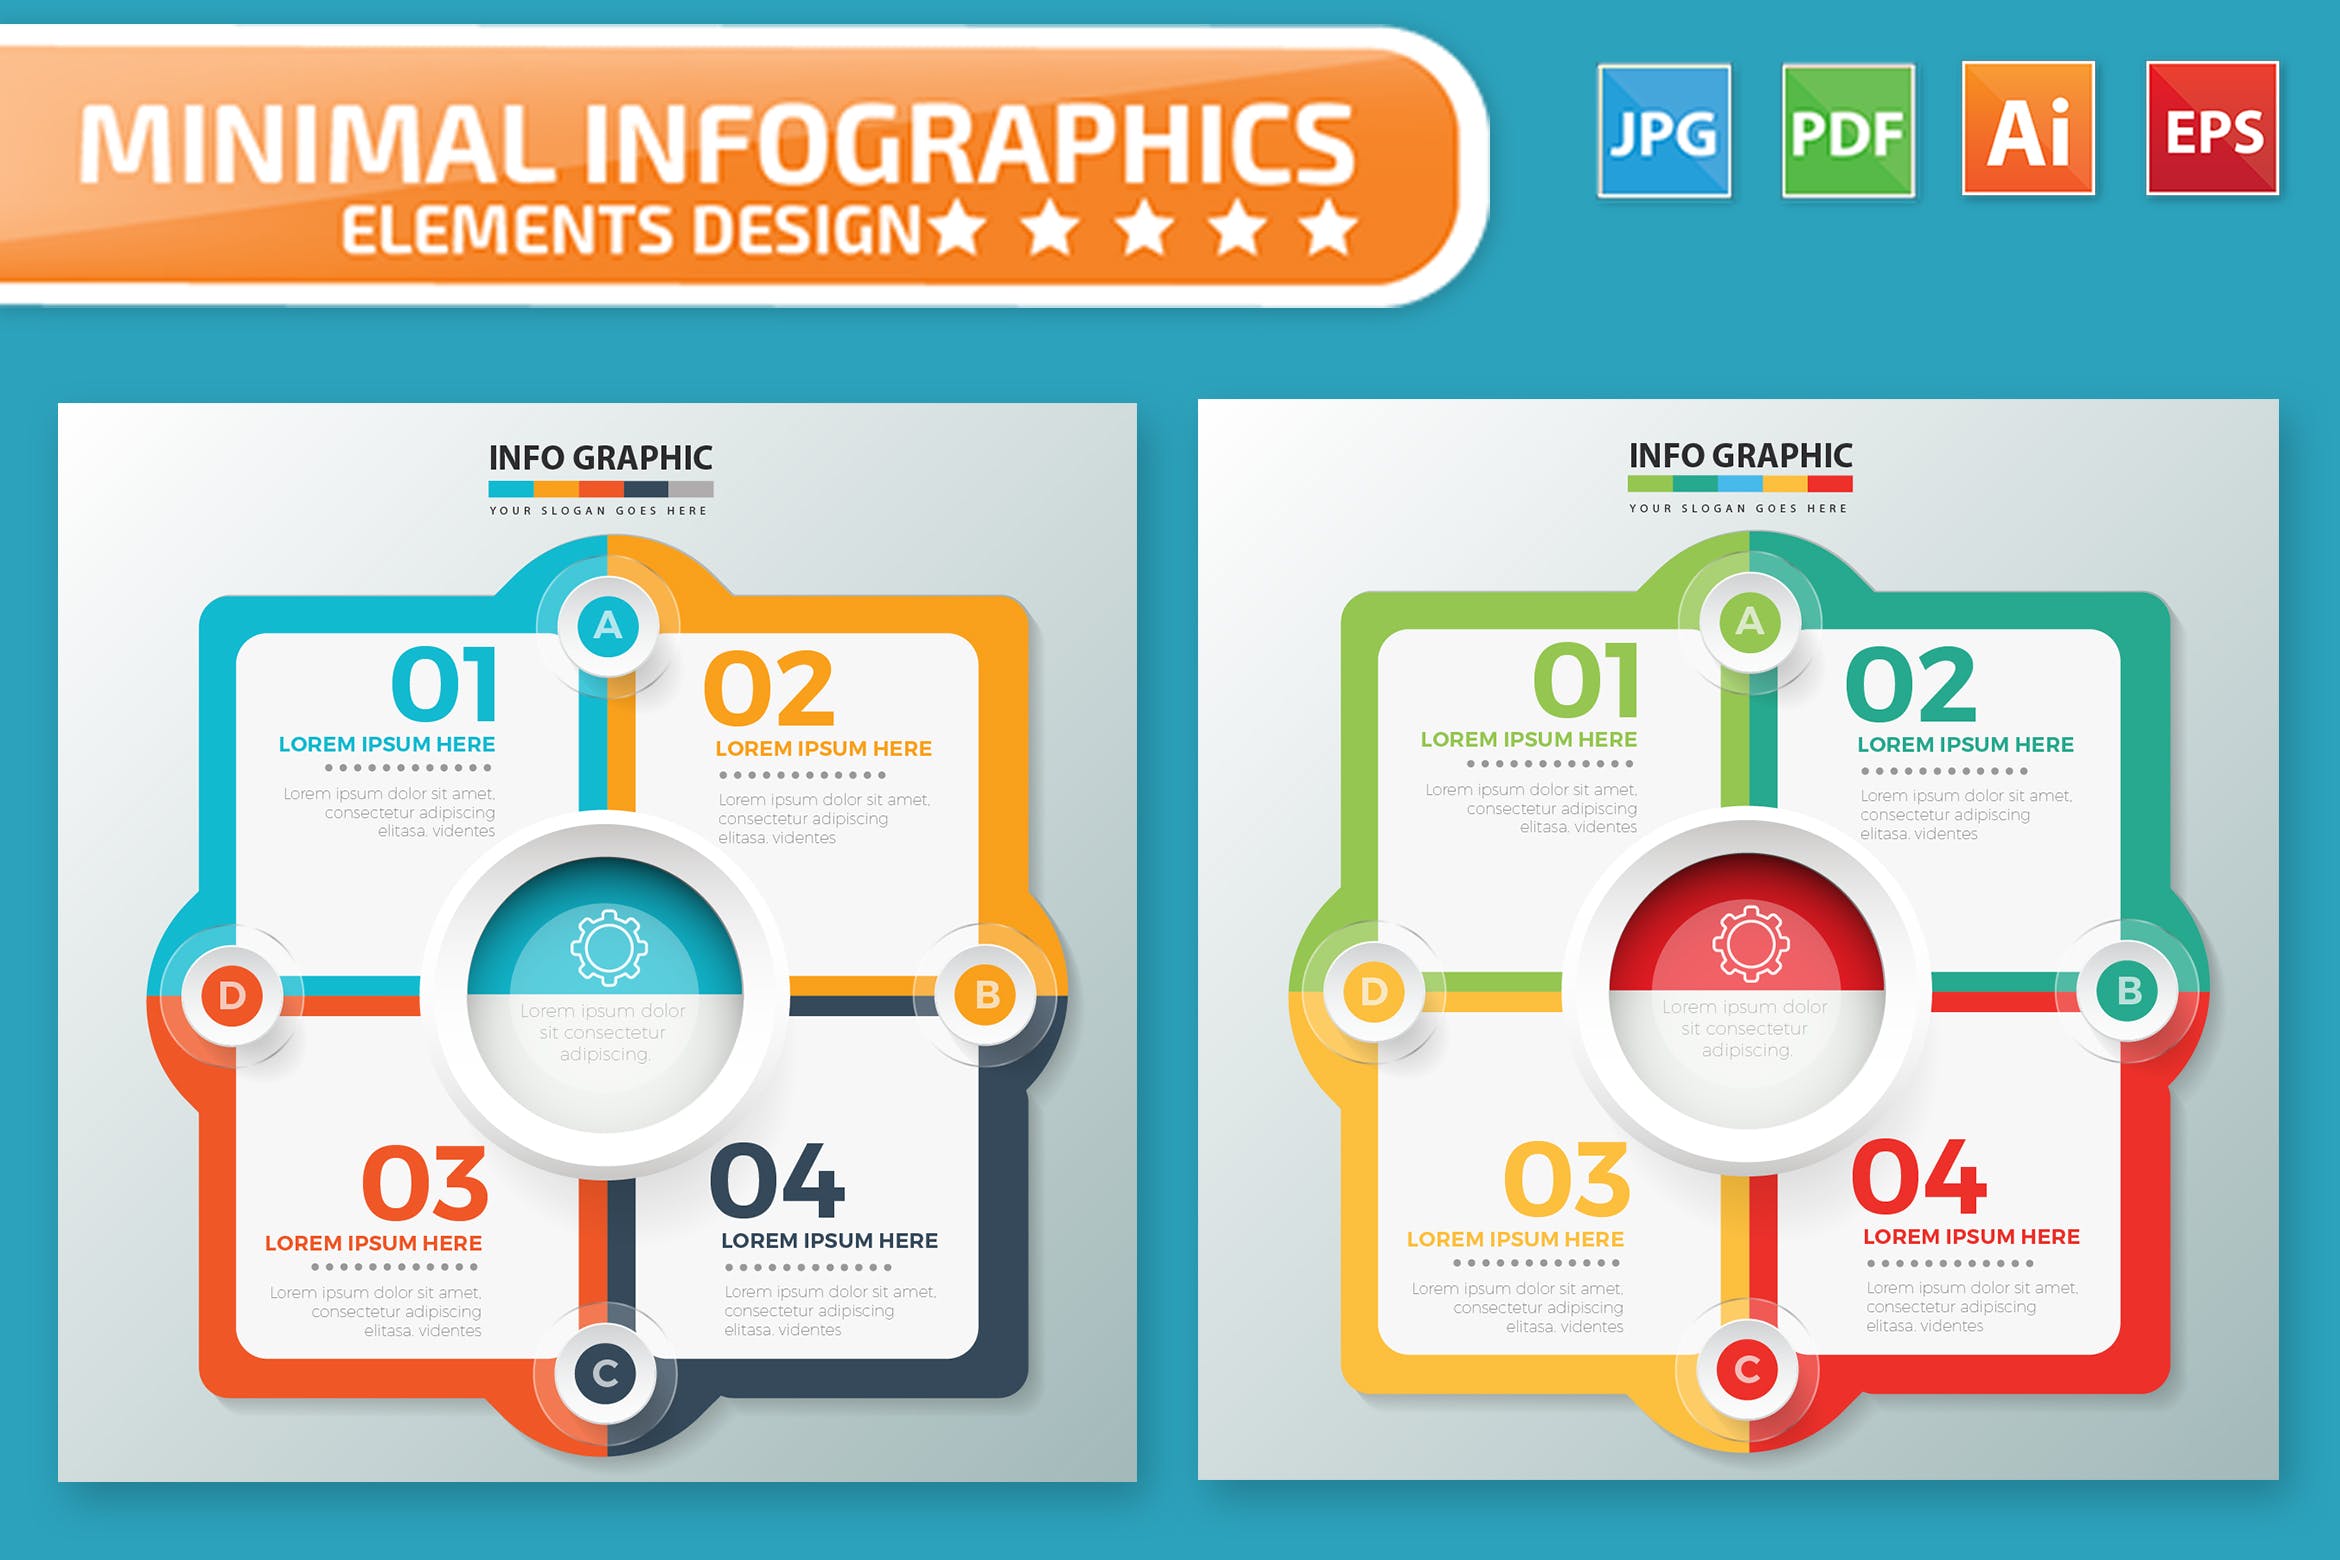 PPT幻灯片步骤流程信息图表设计素材 Infographic Elements插图